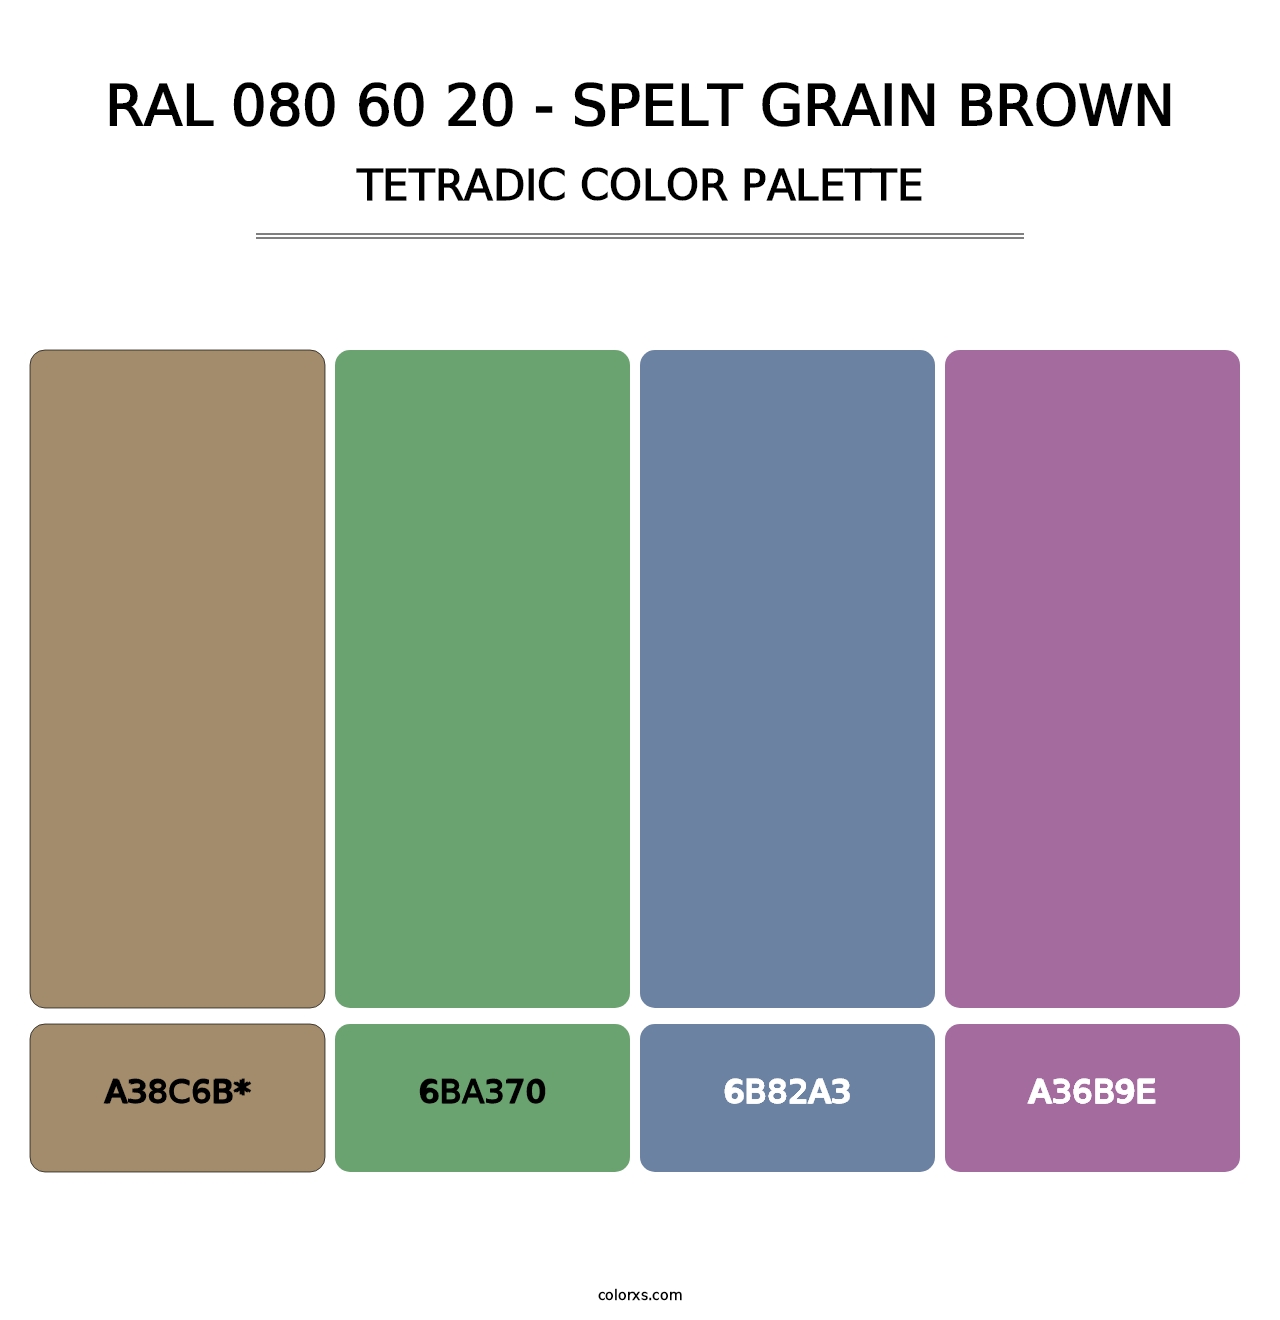 RAL 080 60 20 - Spelt Grain Brown - Tetradic Color Palette